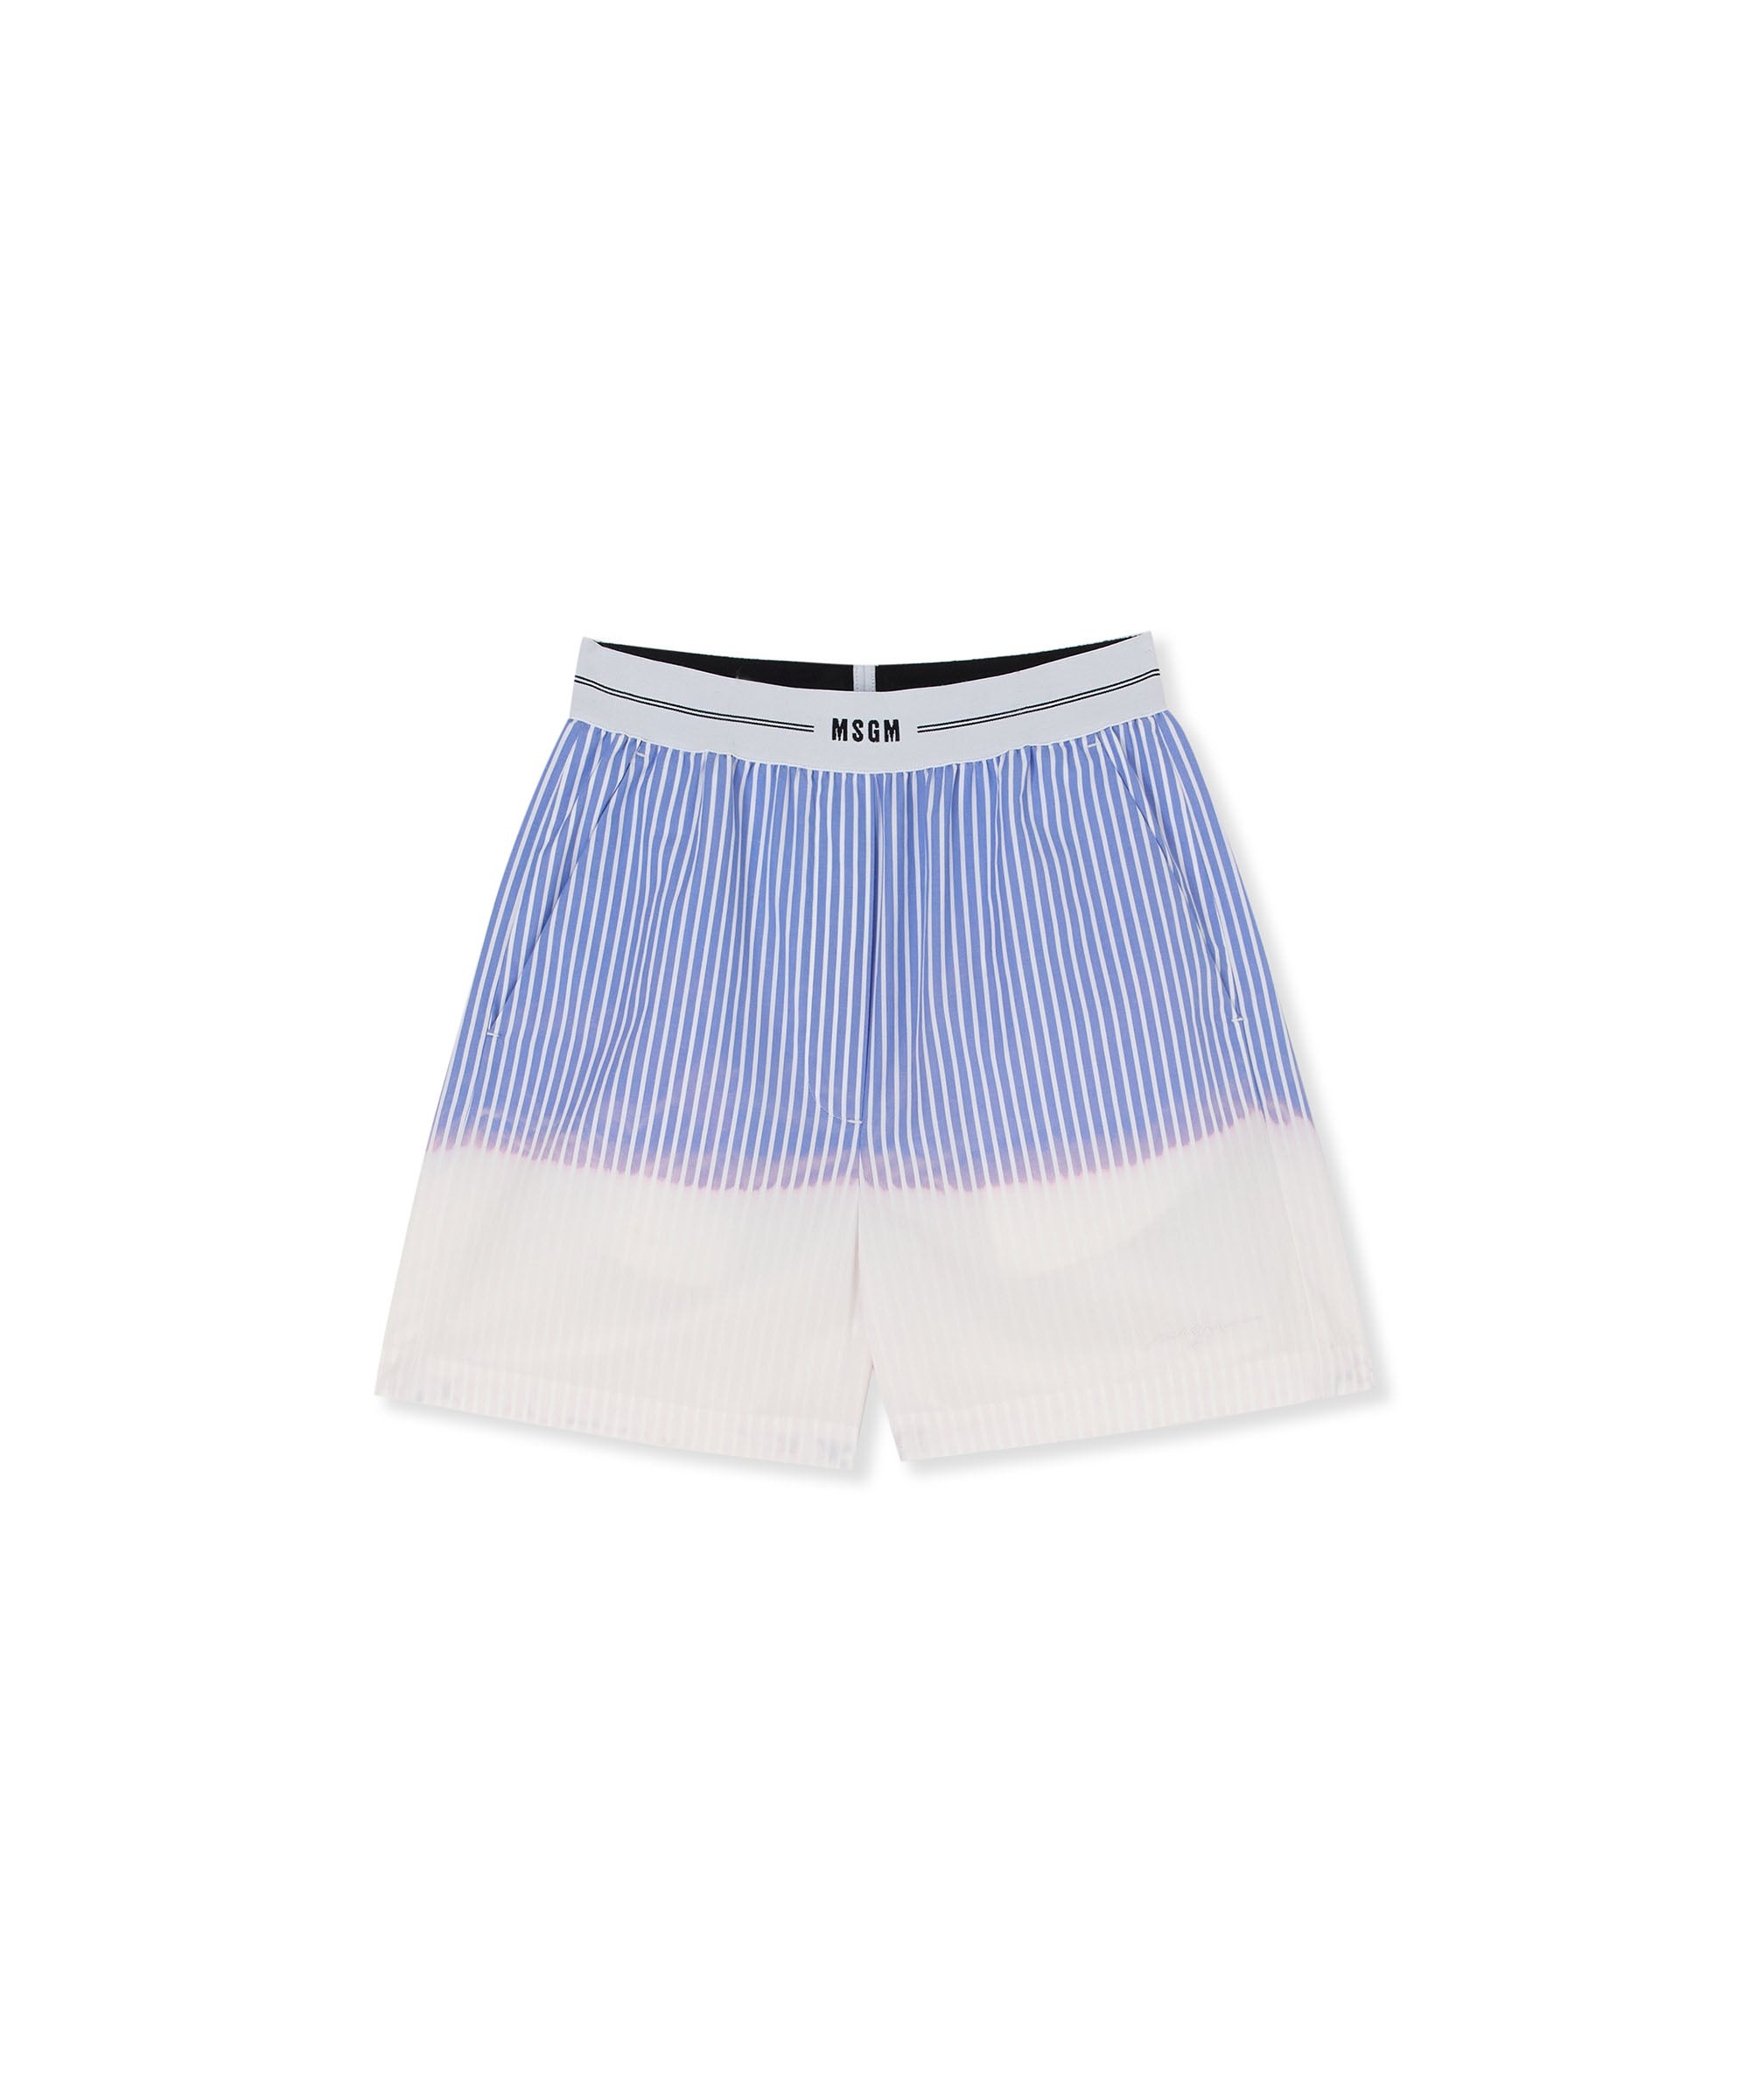 Poplin shorts with waistband logo and faded treatment - 1